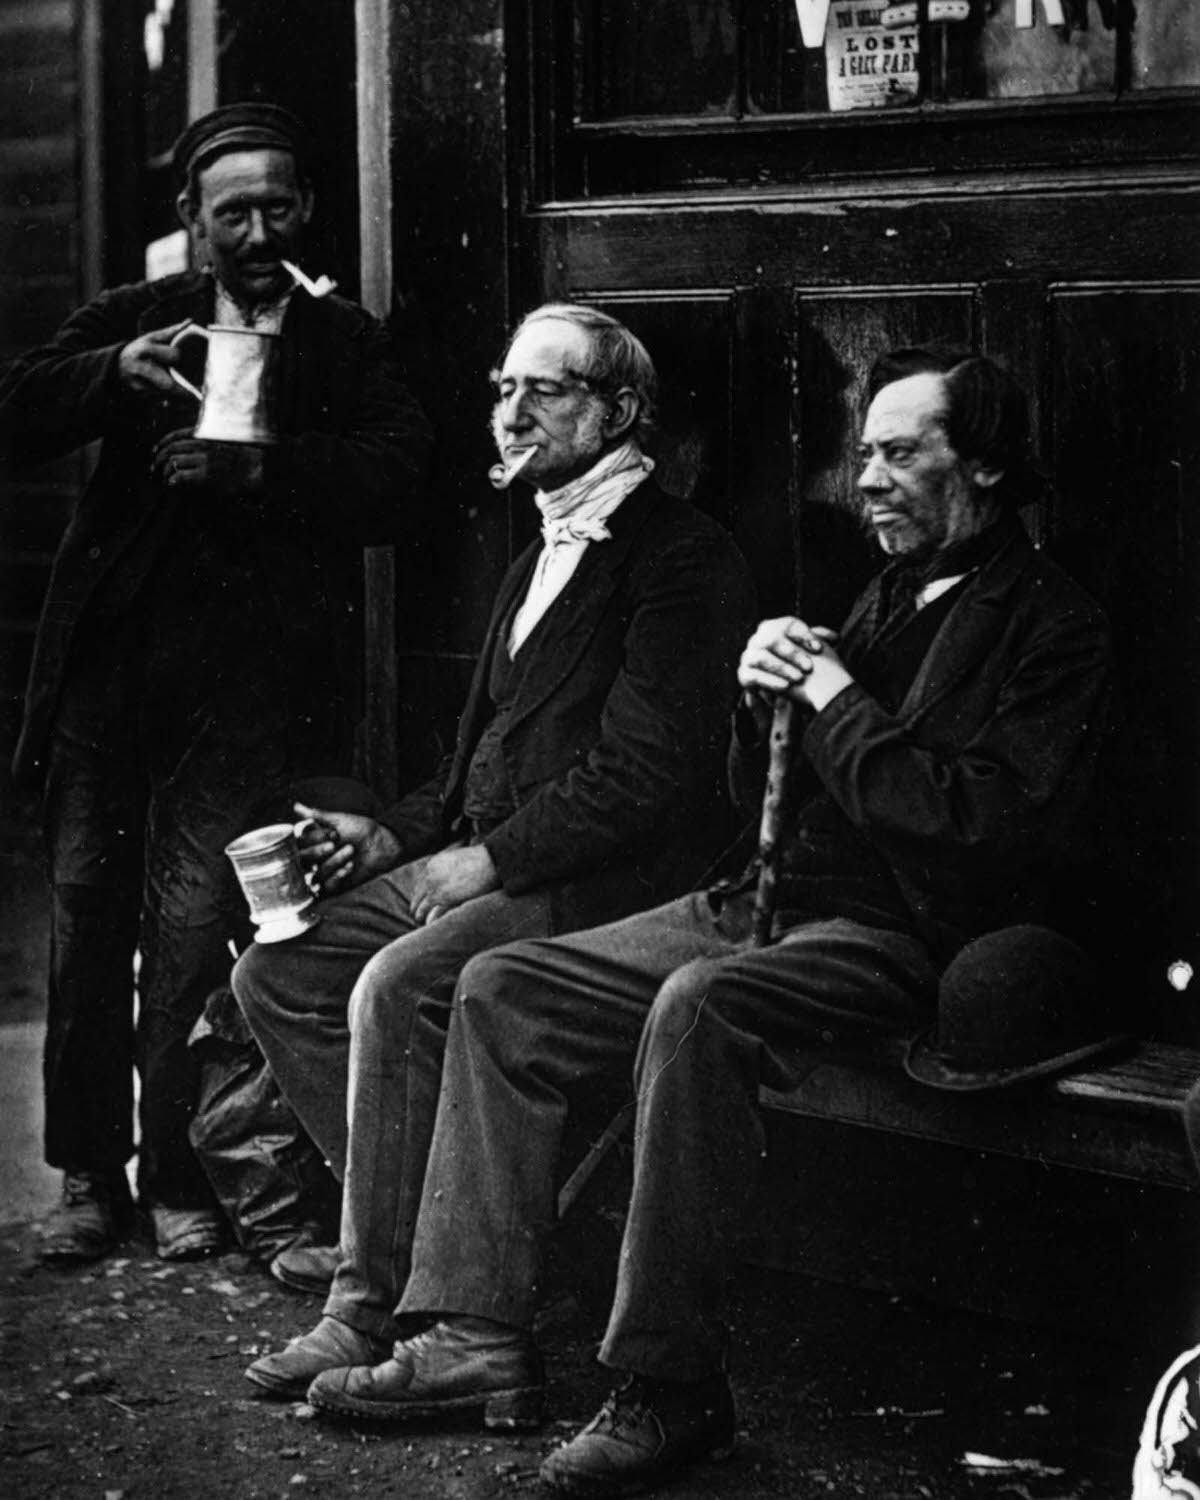 Friends enjoy a beer outside The Wallmaker, a public house, 1877.